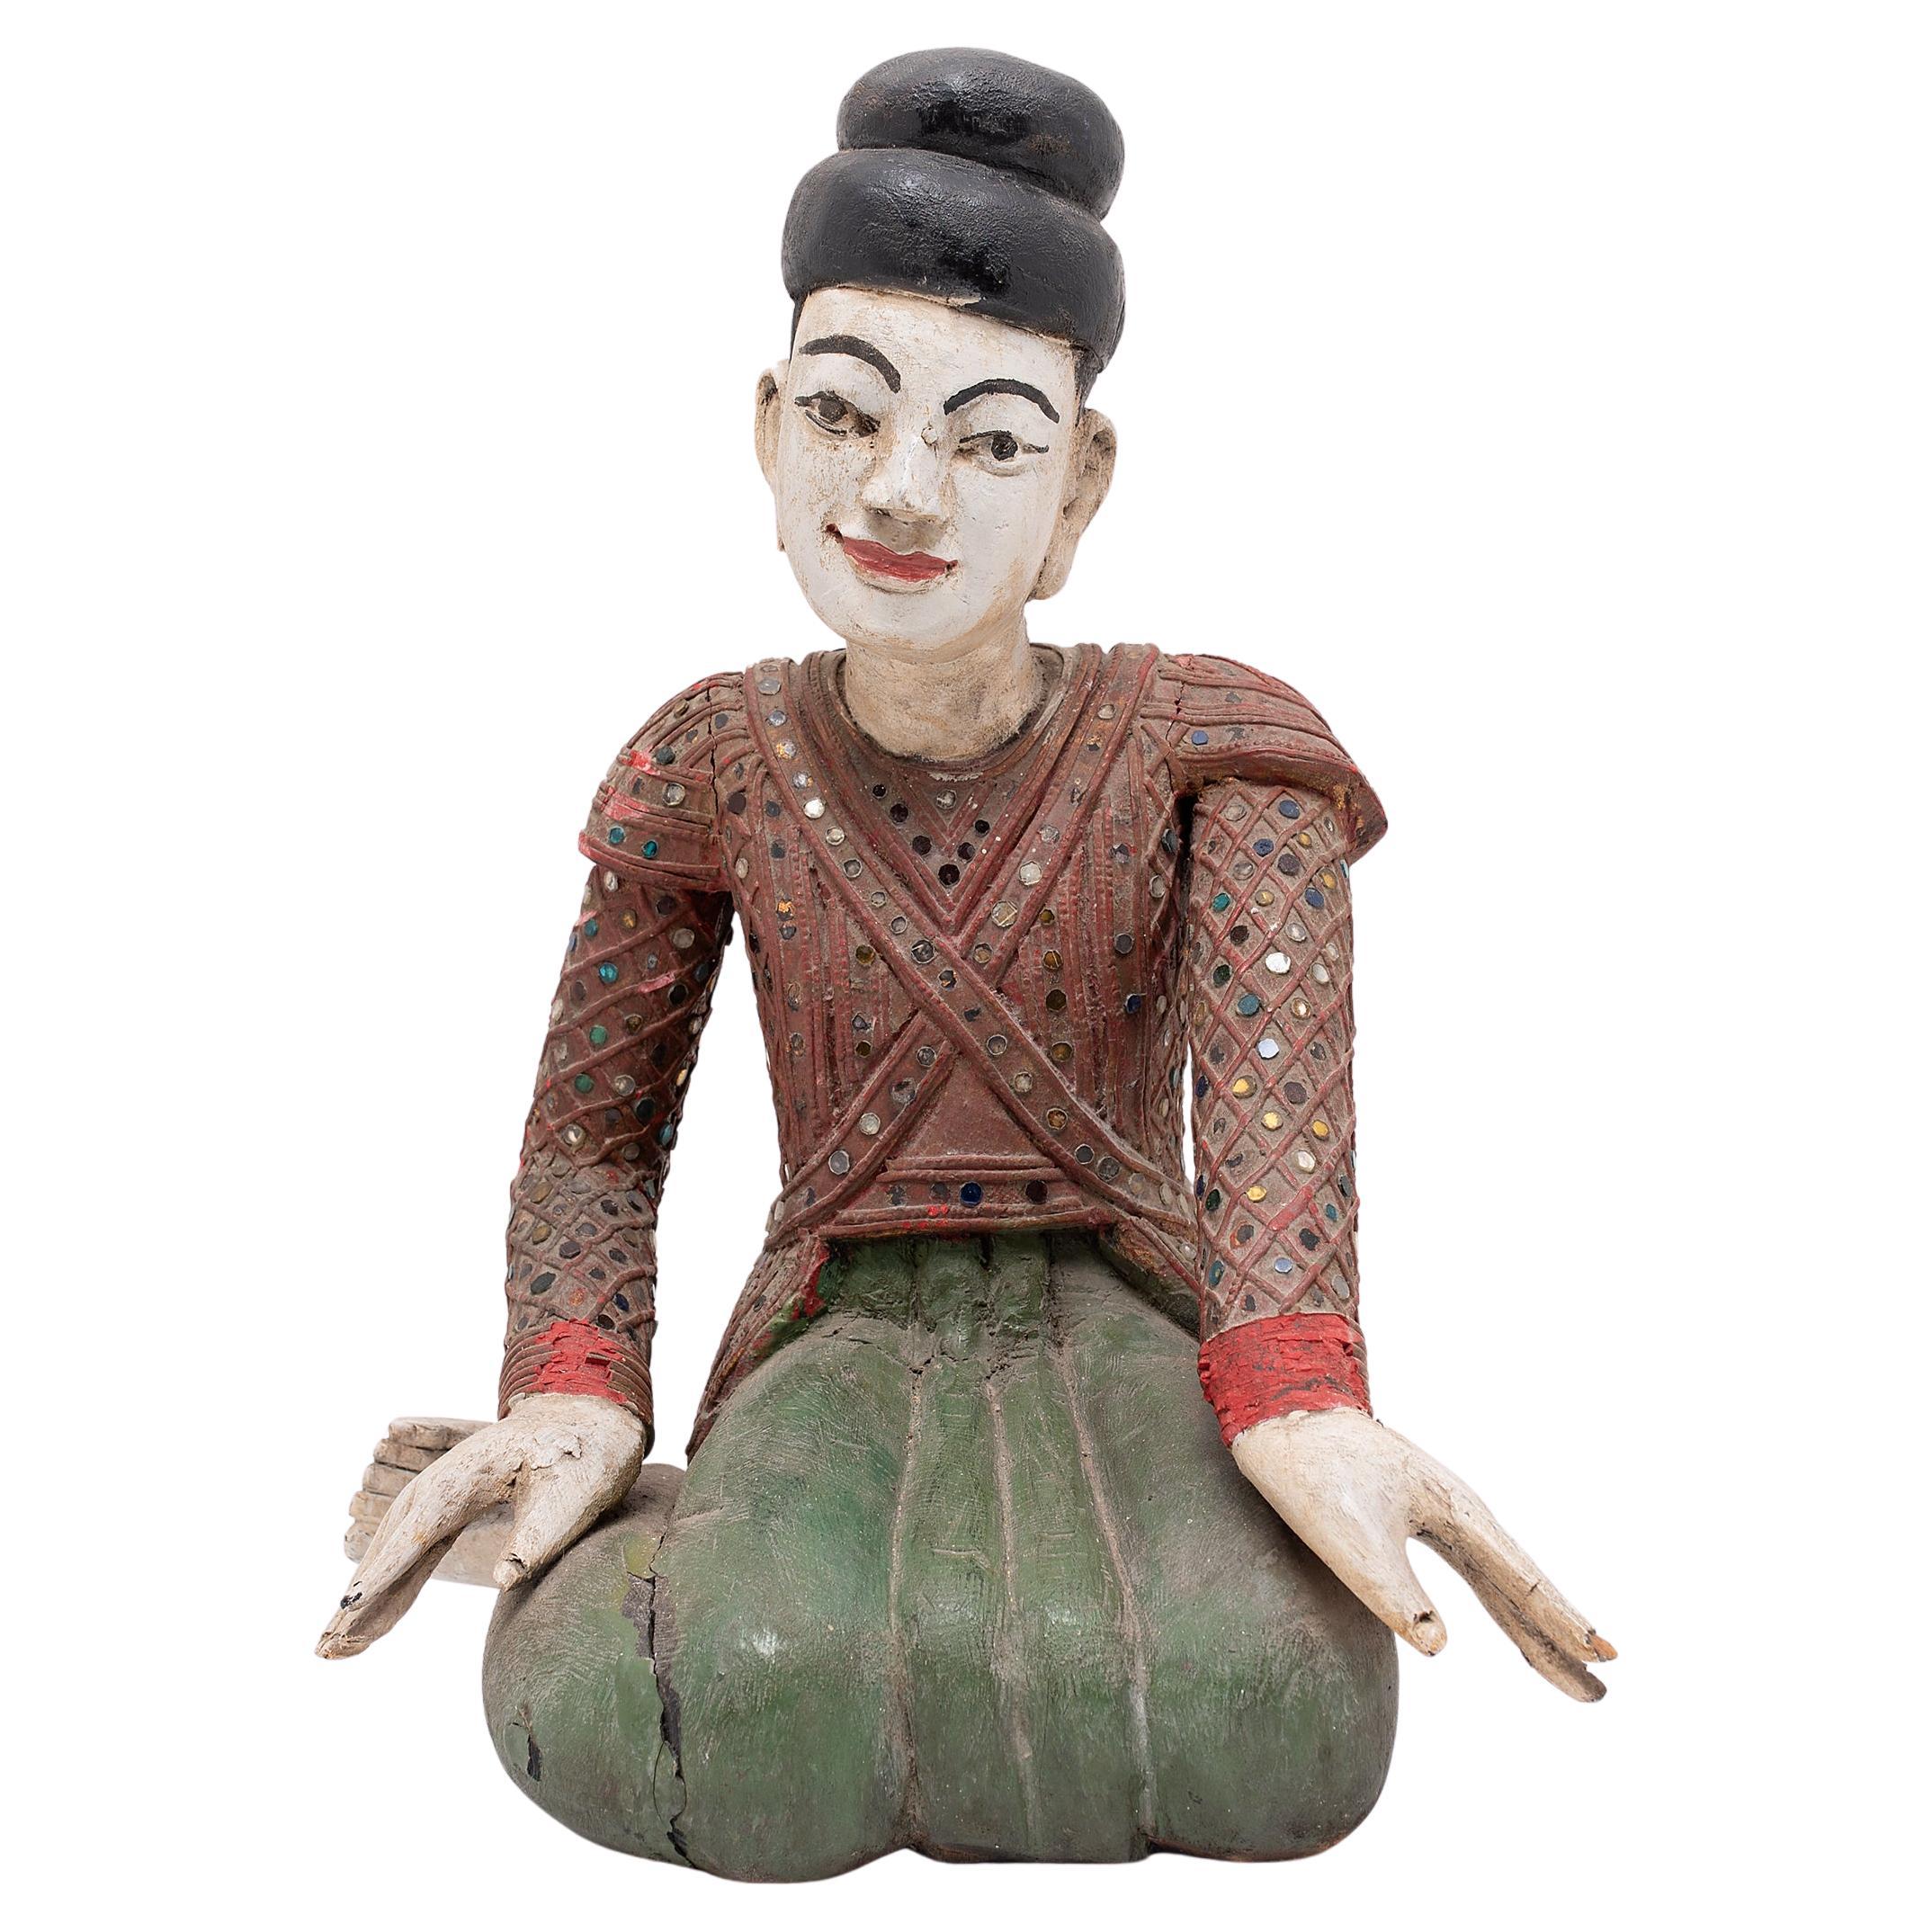 Thai Polychrome Dancer Figure, c. 1900